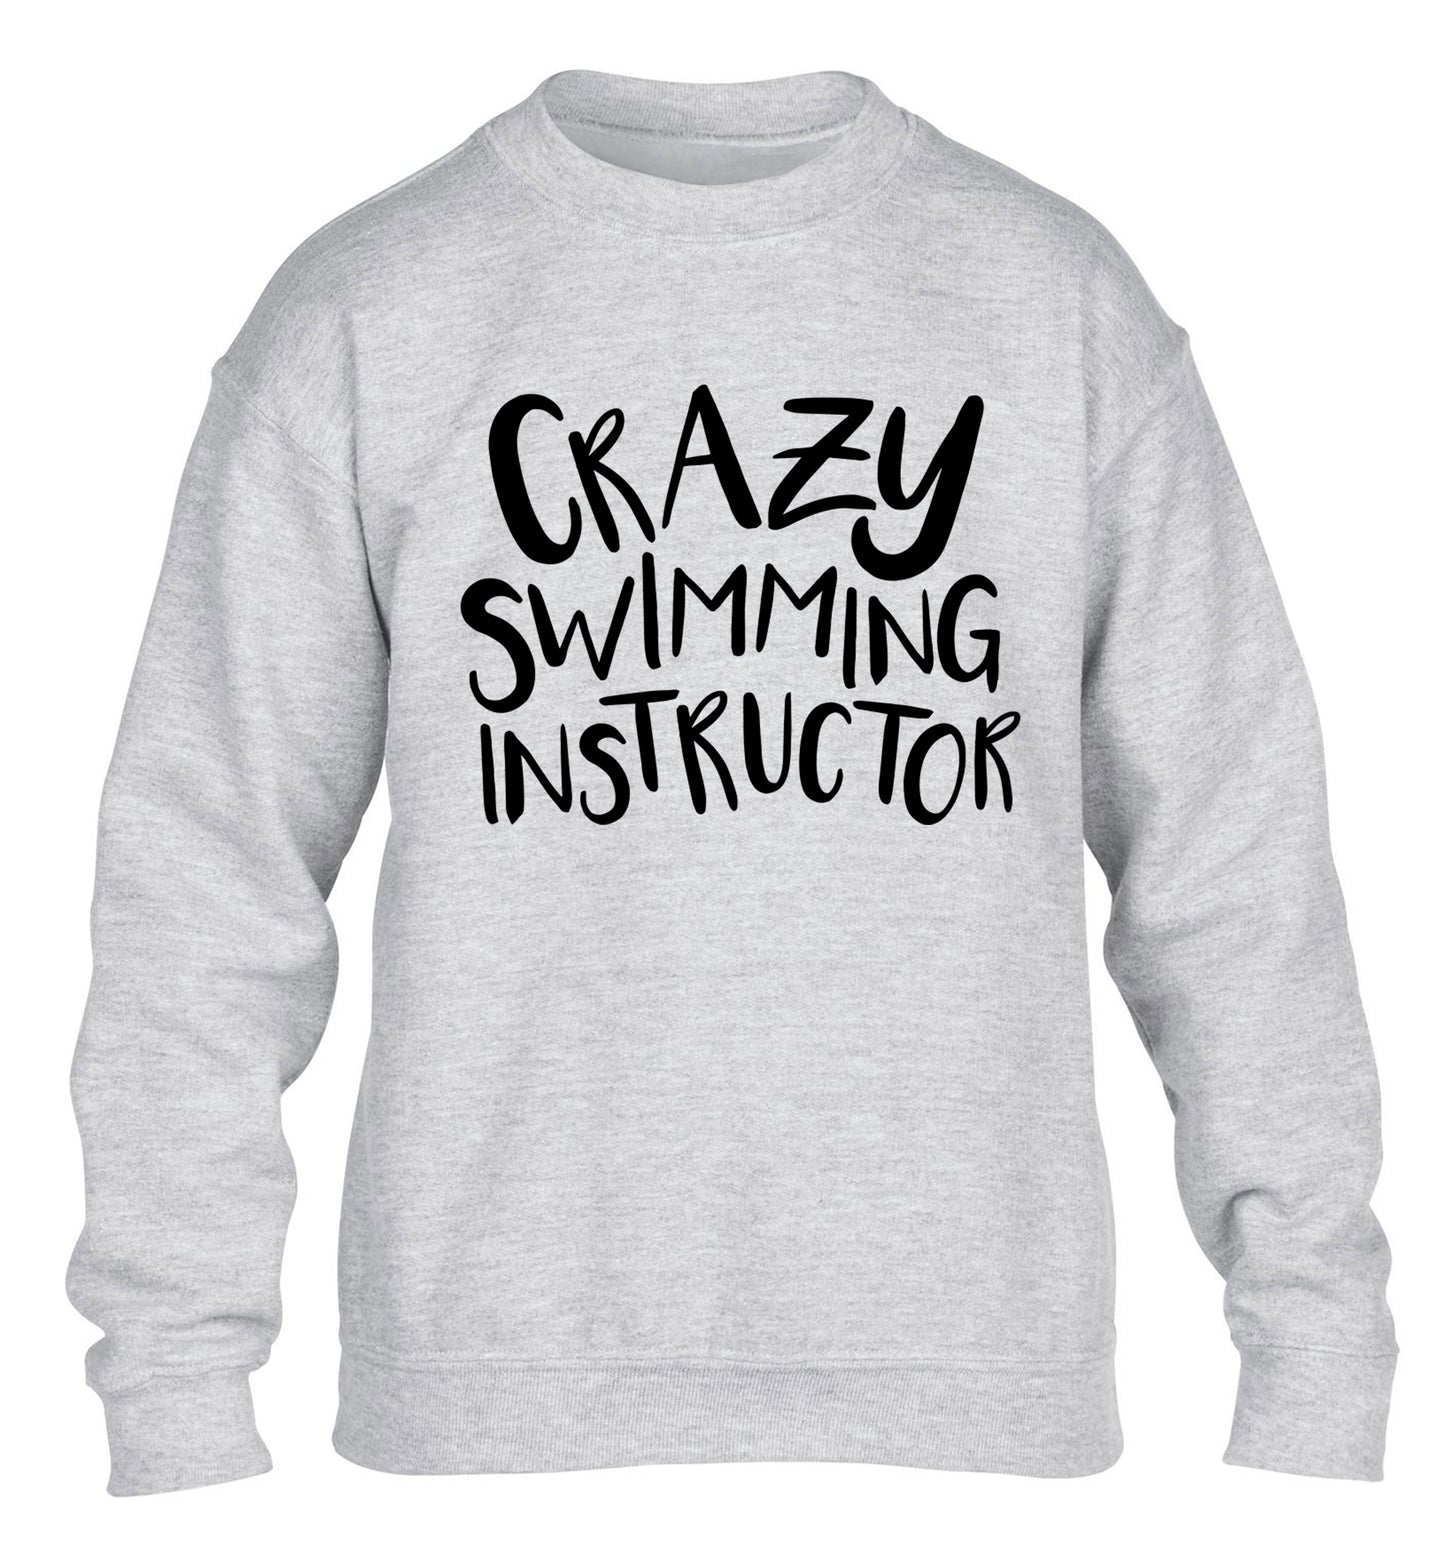 Crazy swimming instructor children's grey sweater 12-13 Years